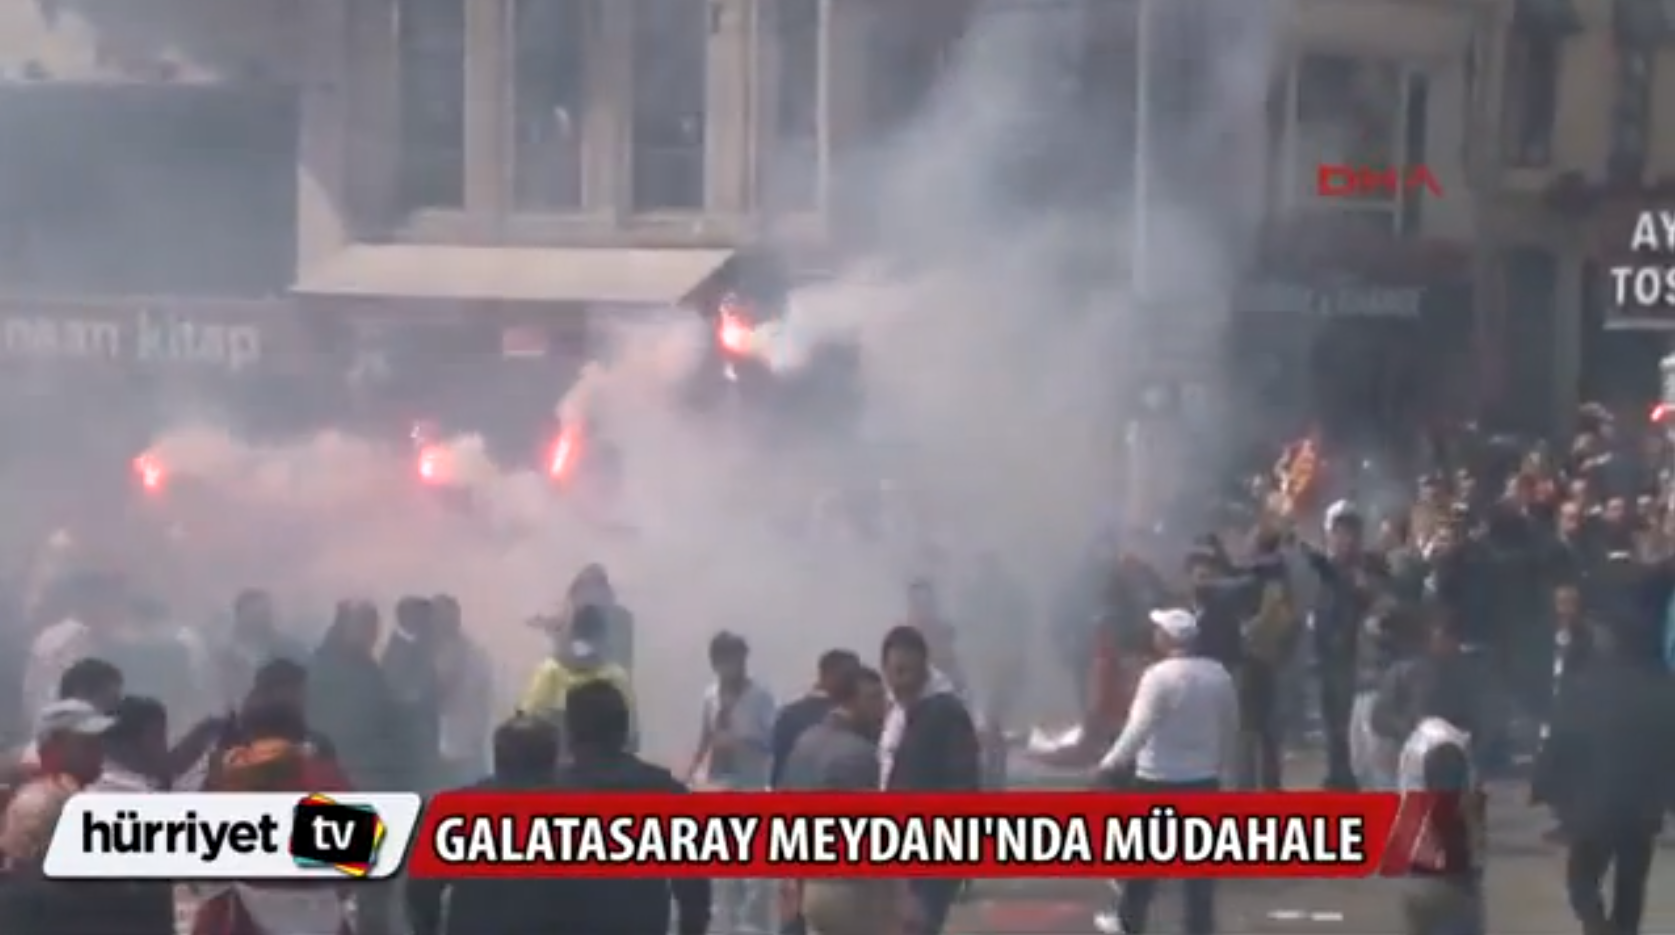 Fotboll, Galatasaray, Istanbul, Protester, Fenerbahce, turkiet, Besiktas